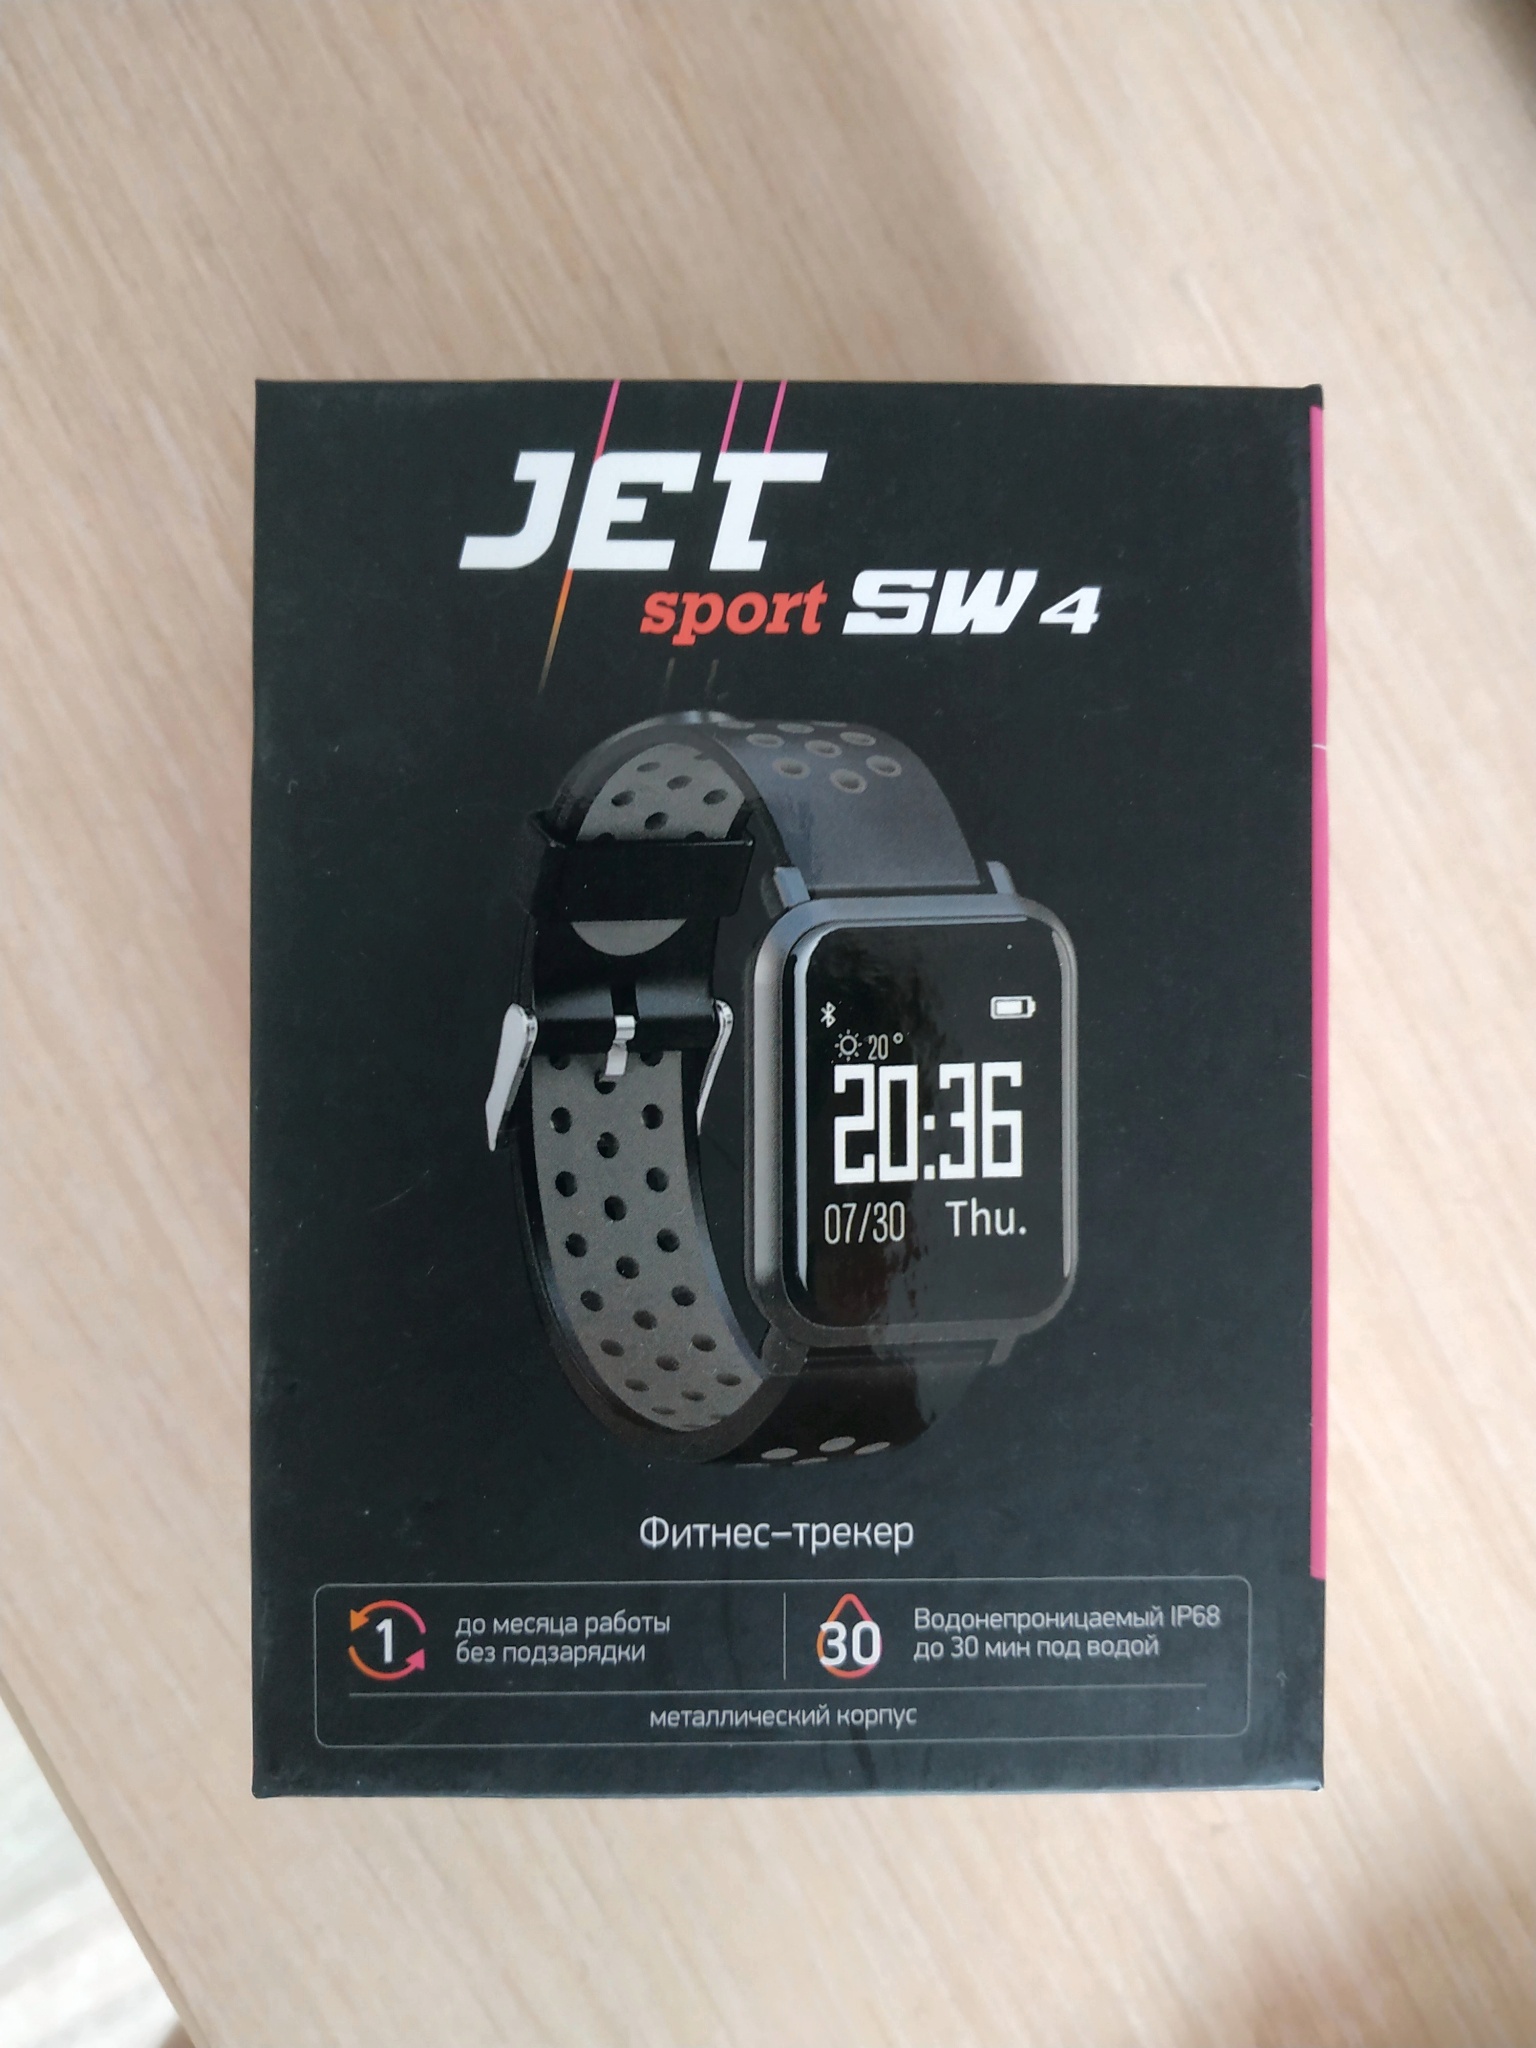 Подключить jet sport. Часы Джет спорт sw4. Jet Sport SW-4c. Часы Jet Sport SW-4c. Часы Jet Sport SW-4.